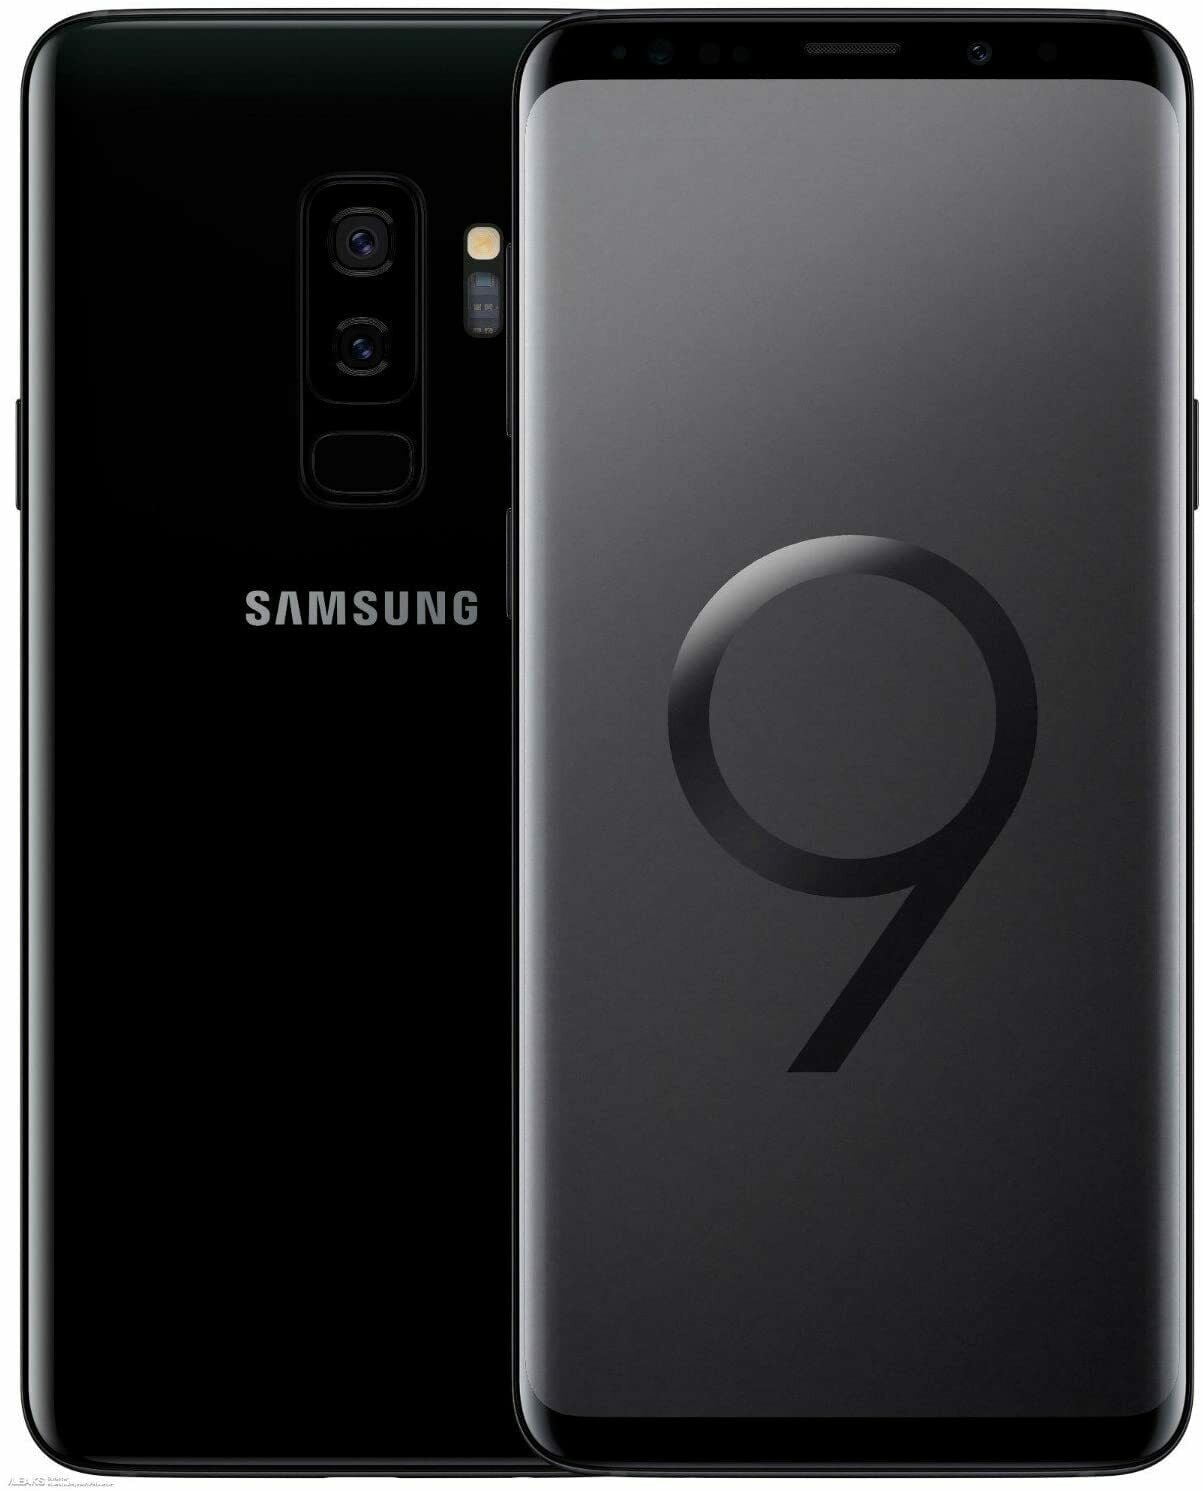 SAMSUNG Galaxy S9+ Factory Unlocked Android 64GB 6GB RAM Excellent Condition, 6.2 GSM/CDMA Unlocked AT&T Verizon T-Mobile - Midnight Black - Walmart.com